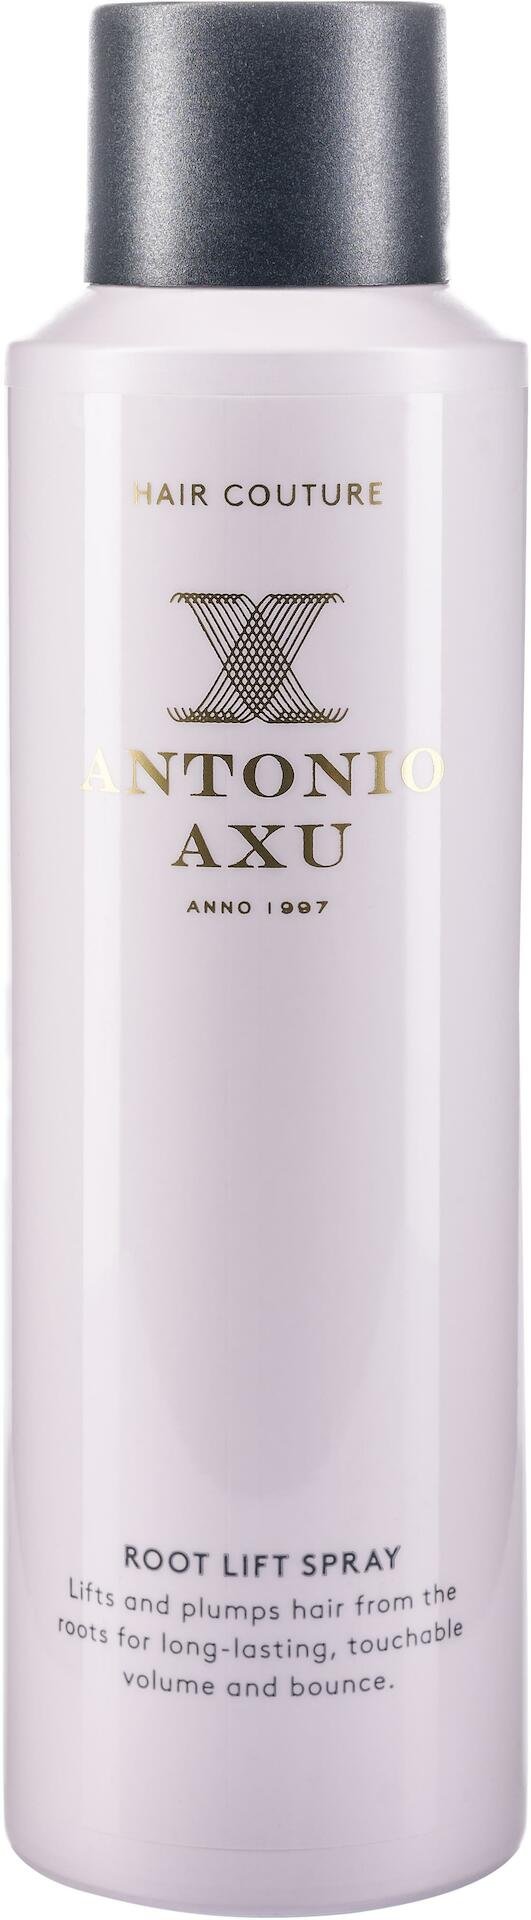 Antonio Axu Root Lift Spray 200ml